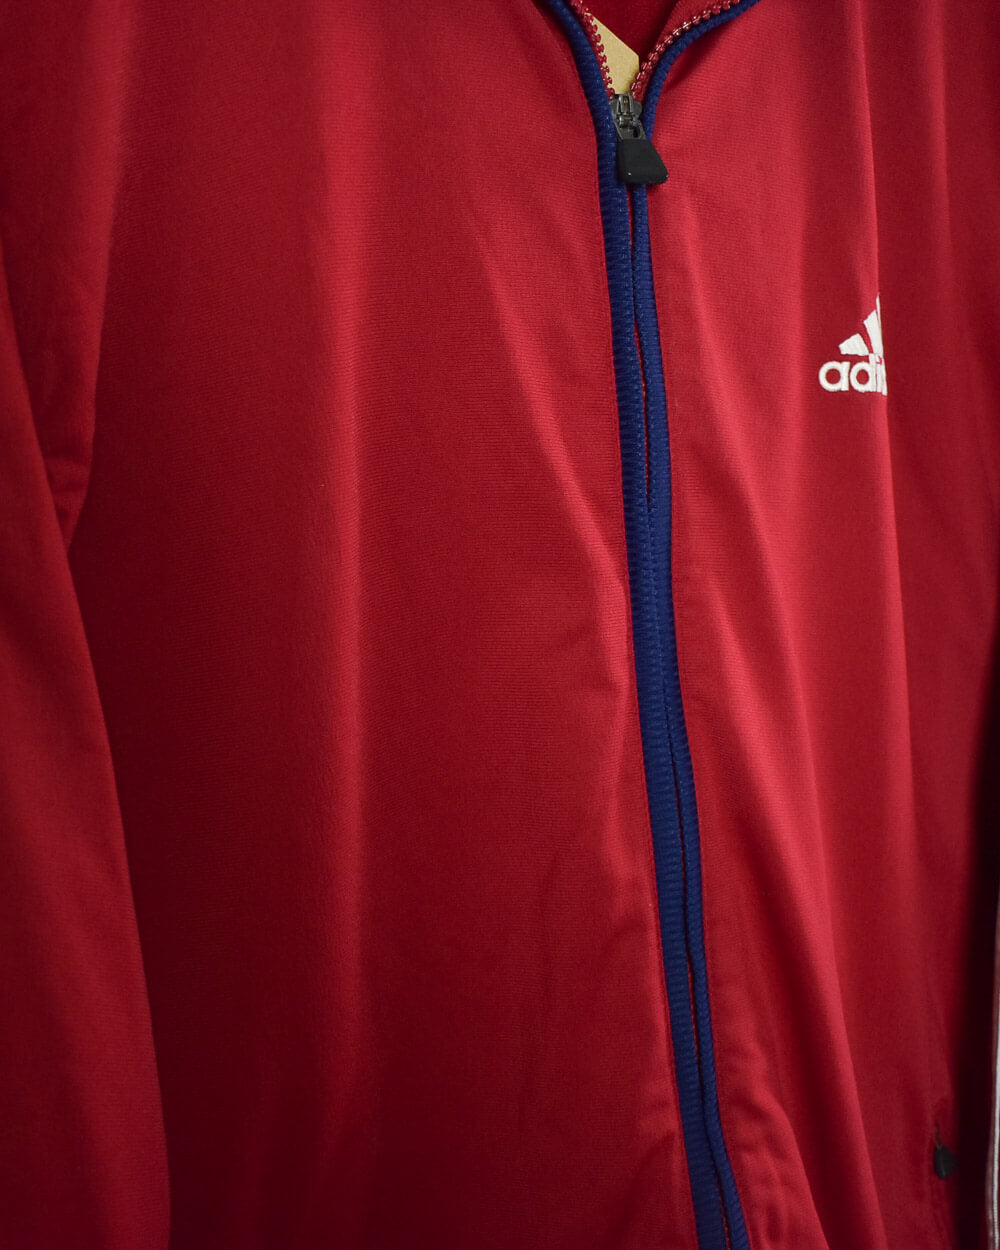 Red Adidas Hooded Tracksuit Top - Medium